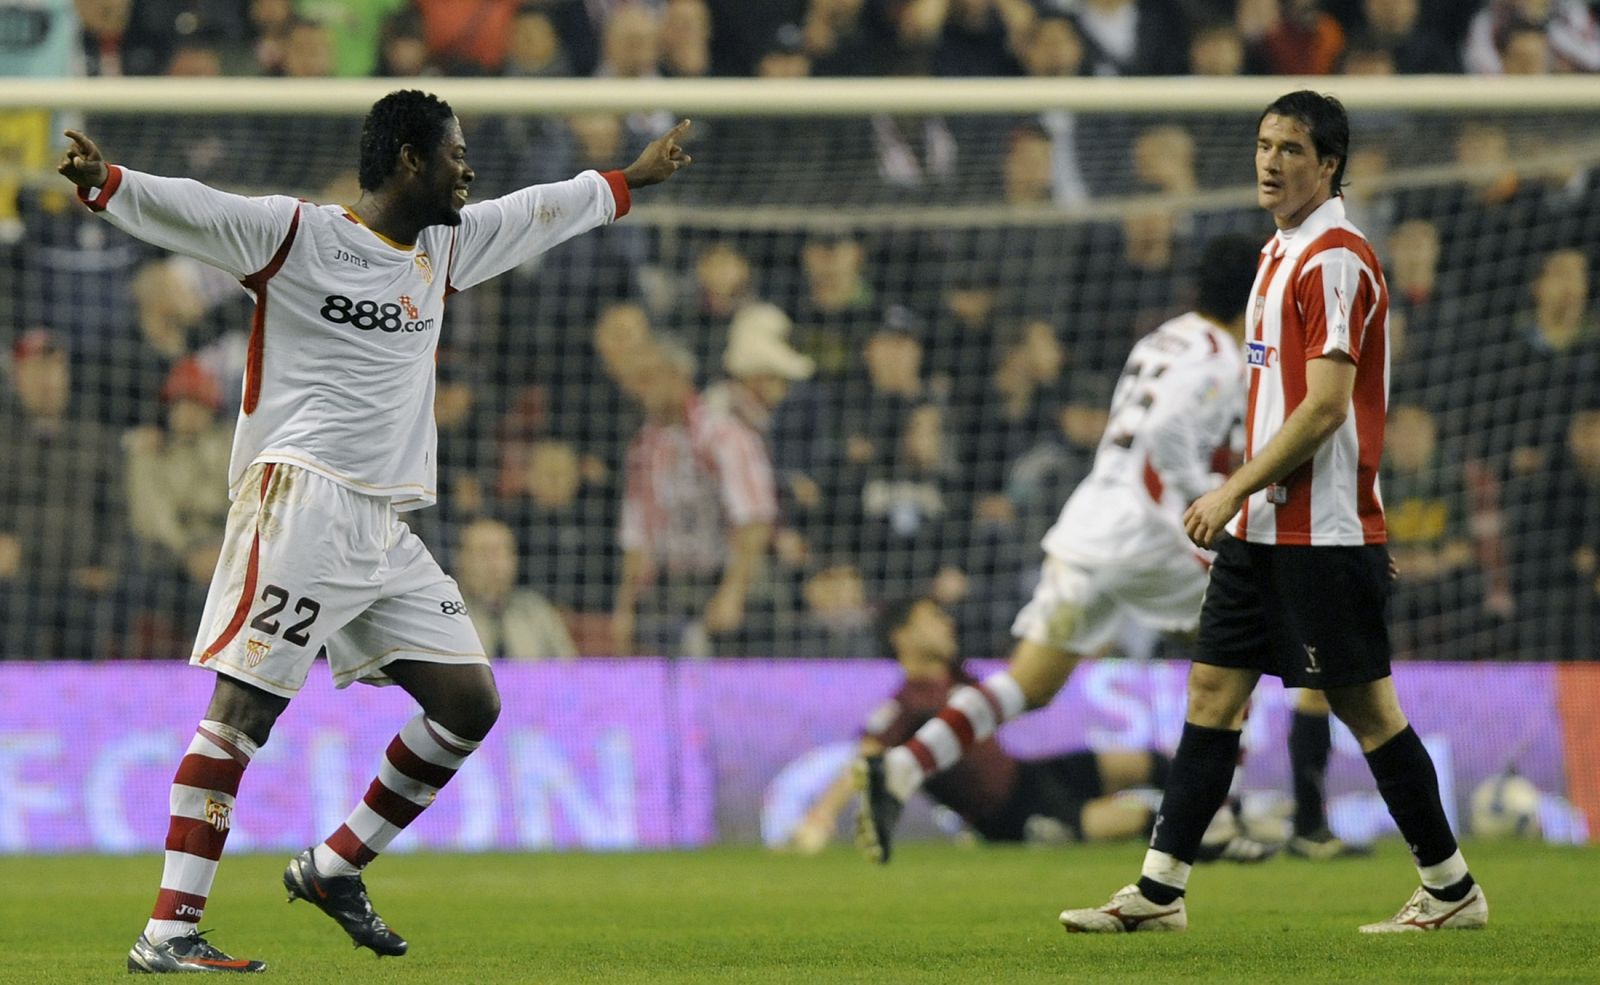 Christian Romaric del Sevilla celebra el gol marcado al Athletic de Bilbao.